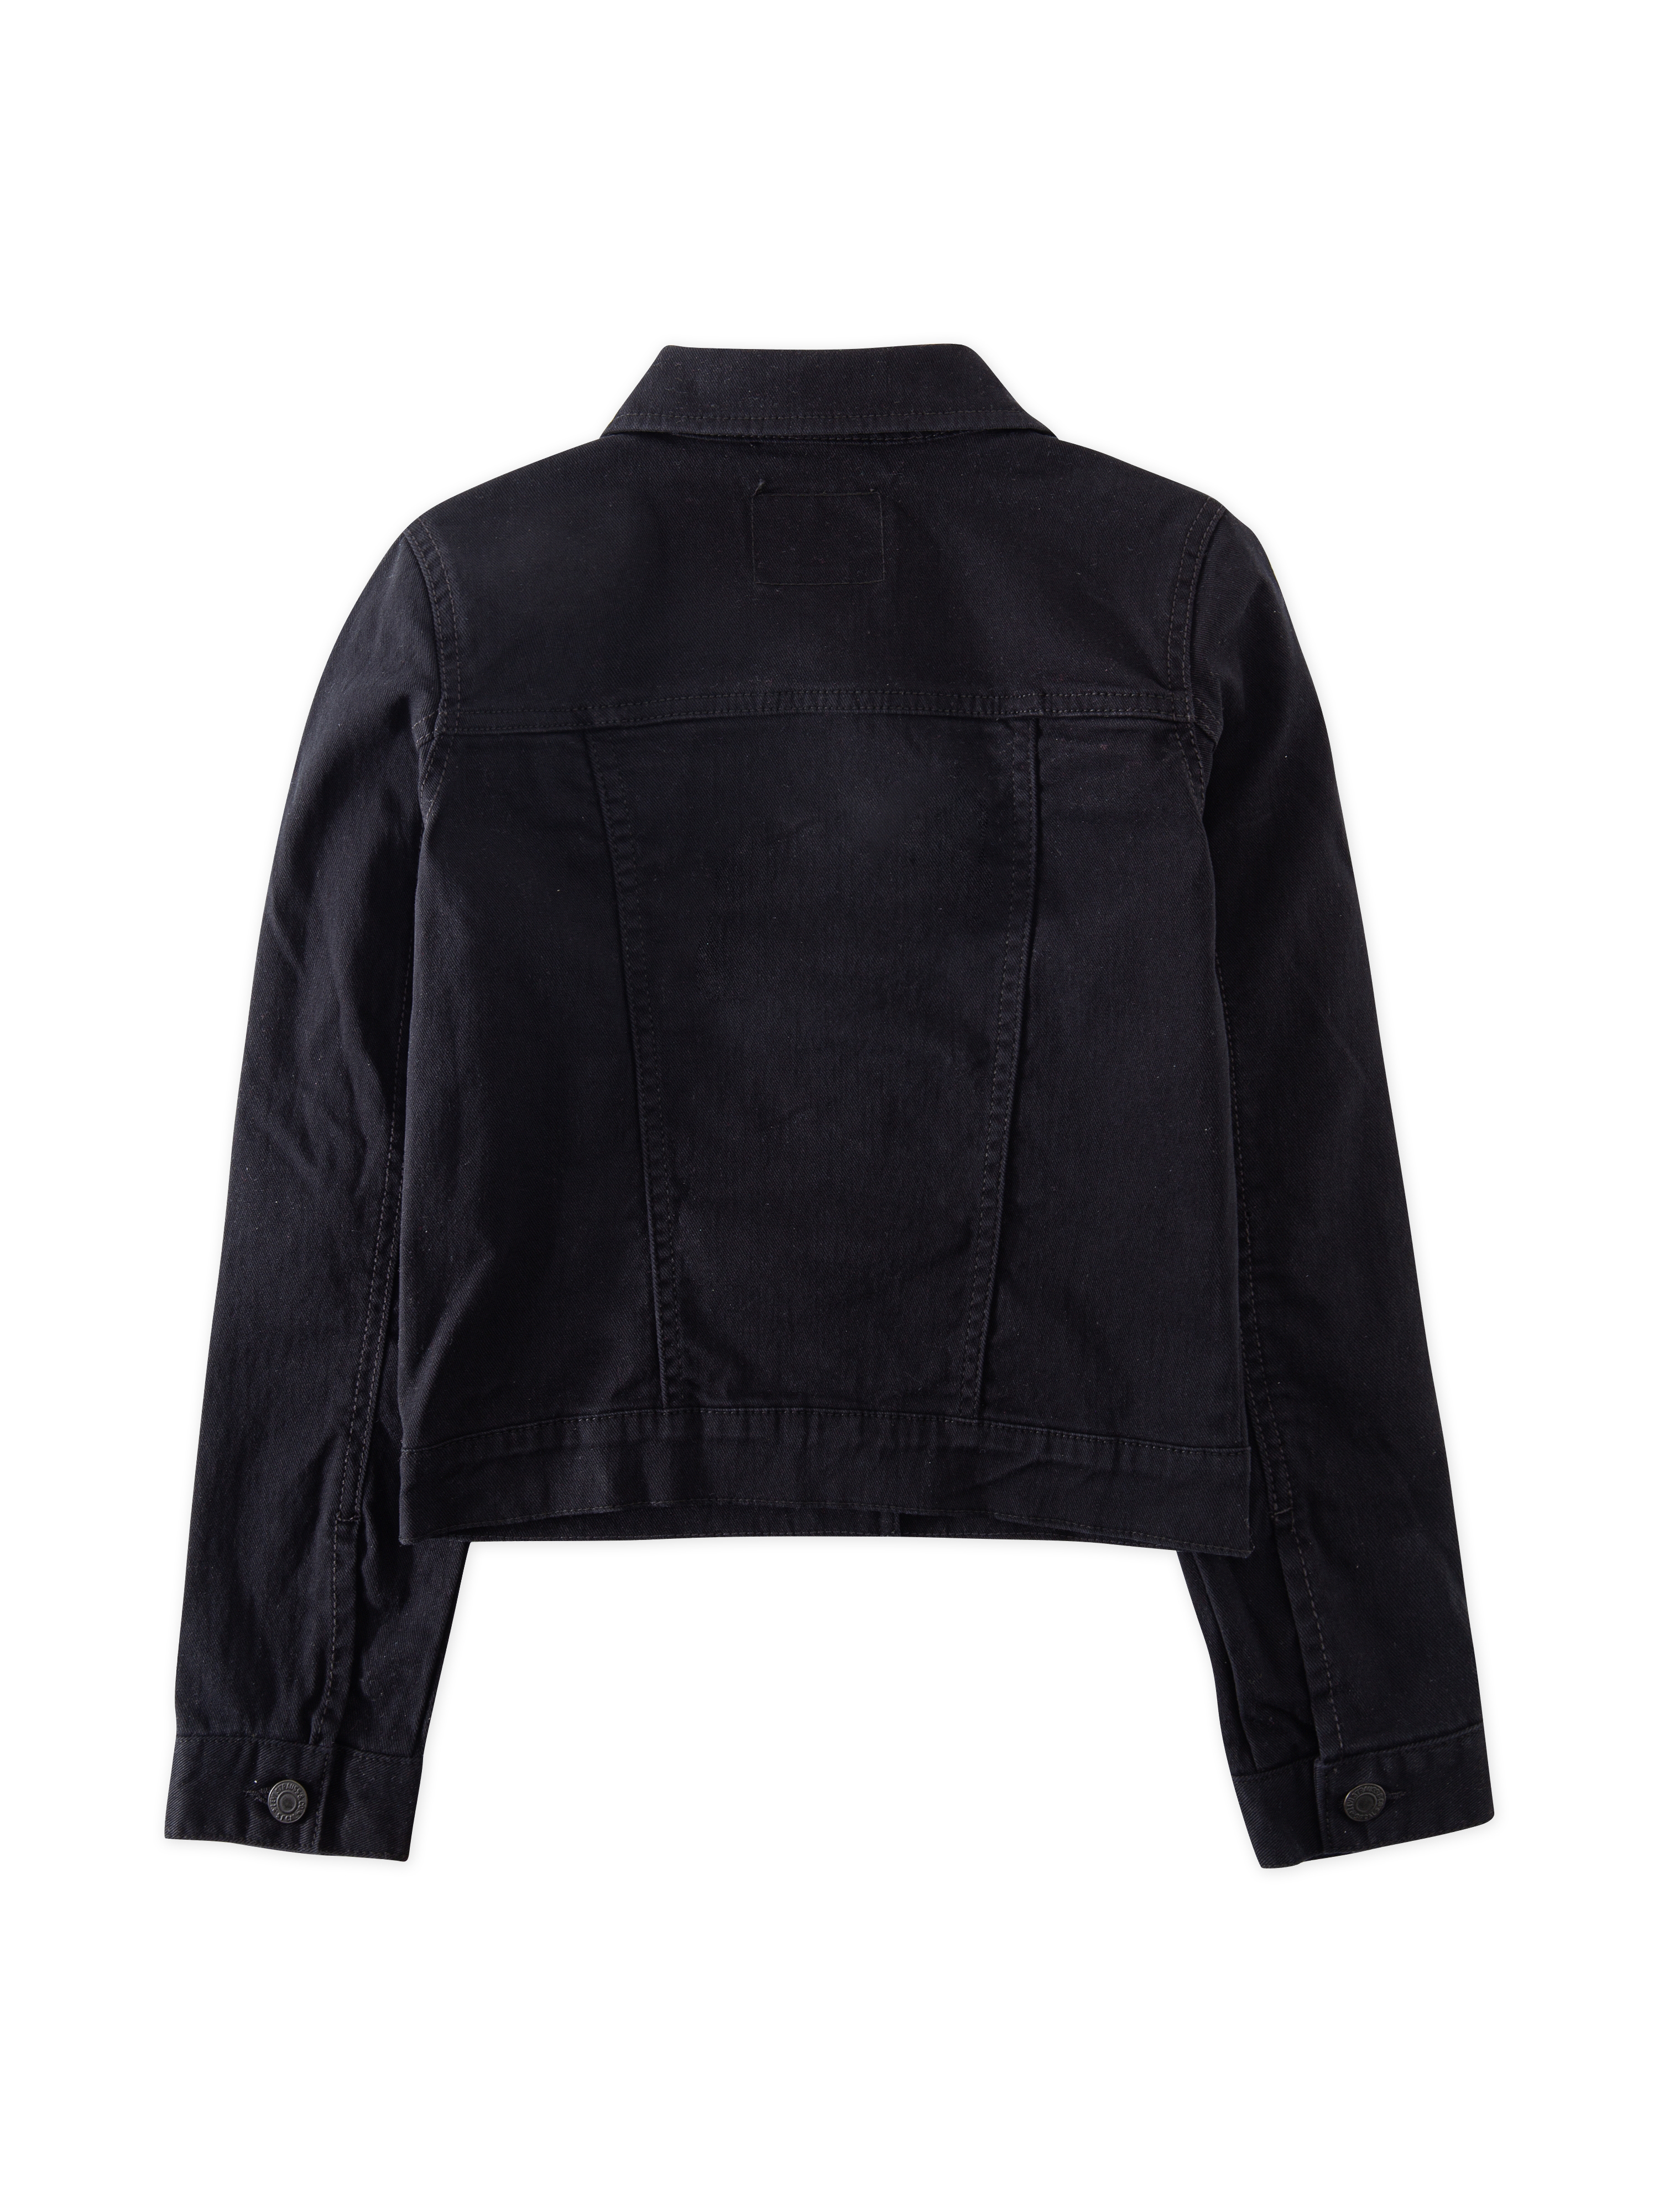 Levi's Girls' Denim Trucker Jacket, Sizes 4-16 - image 5 of 7